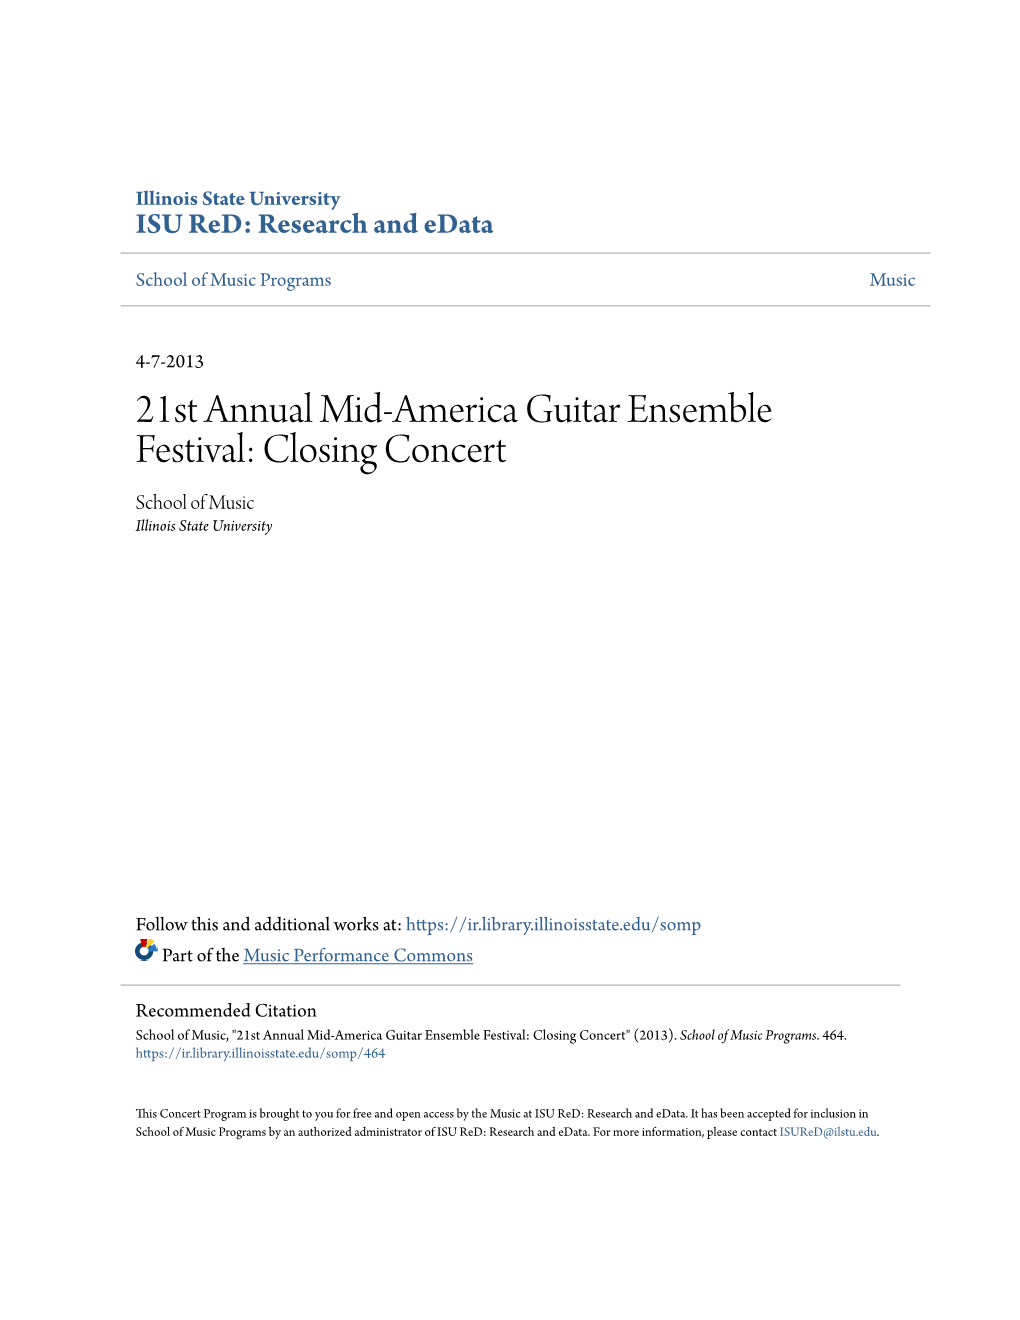 21St Annual Mid-America Guitar Ensemble Festival: Closing Concert School of Music Illinois State University